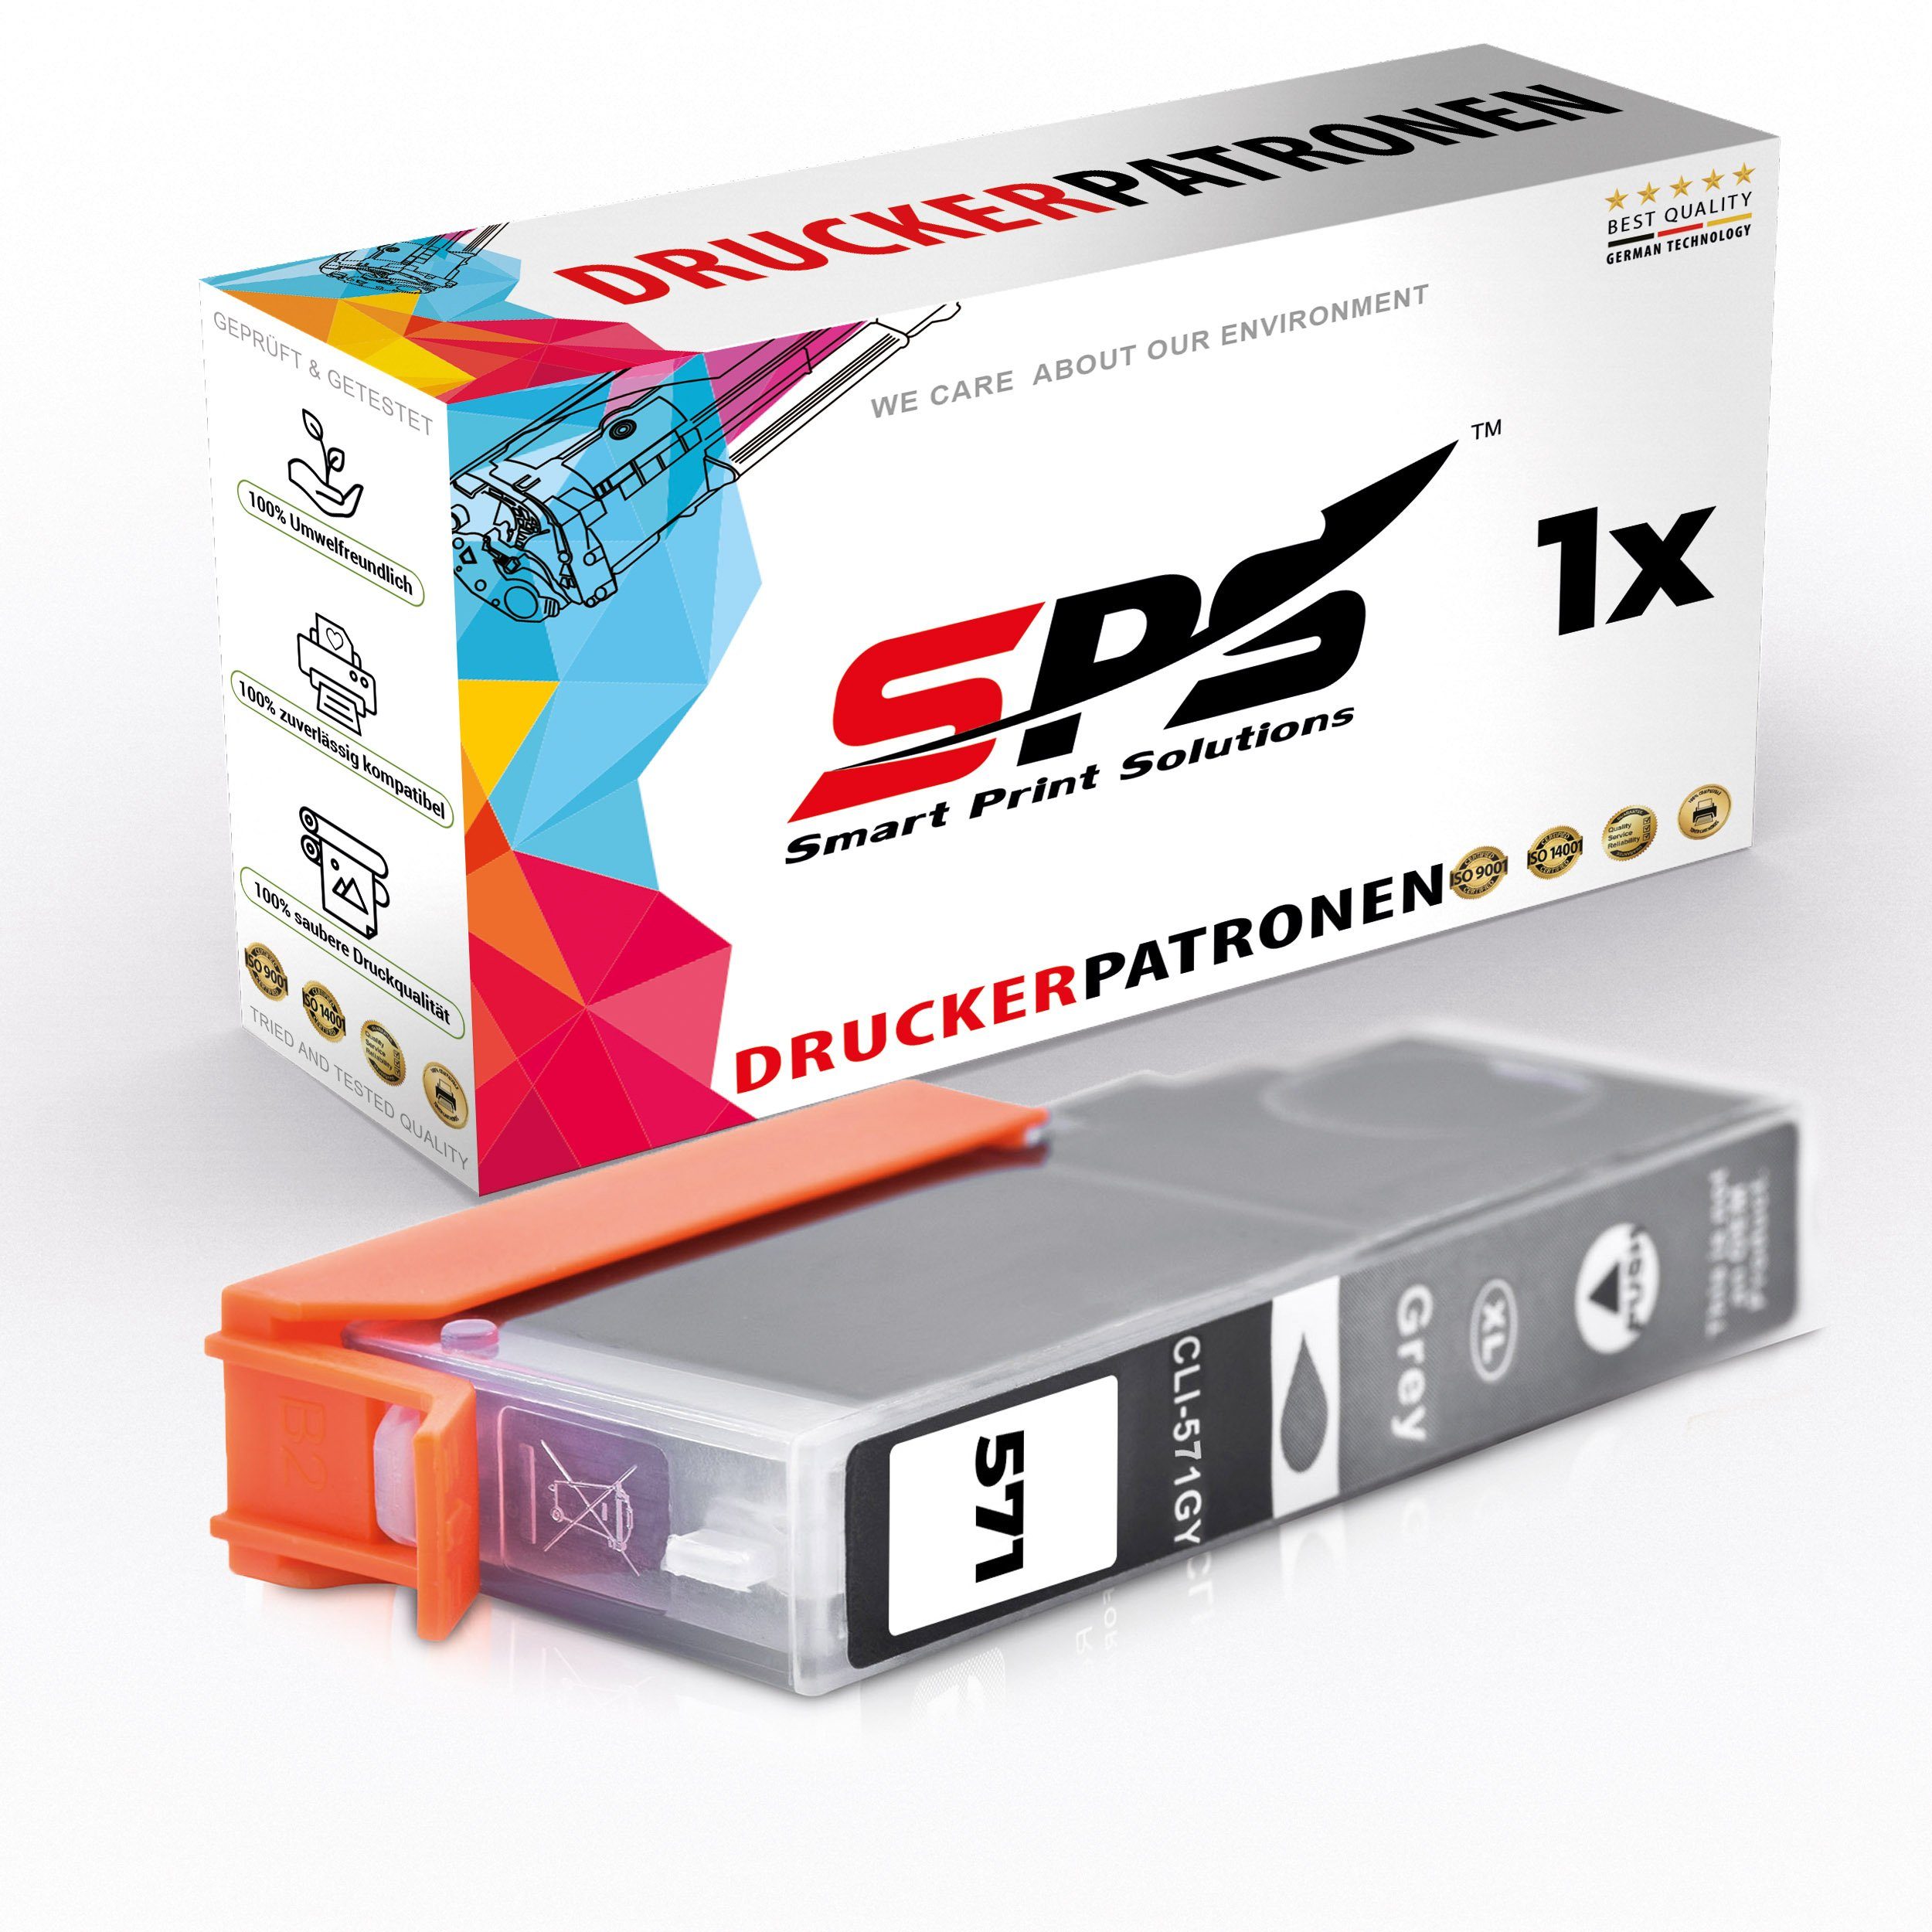 SPS Kompatibel für Canon Pixma TS8050 (1369C006) 0335C Tintenpatrone (1er Pack)